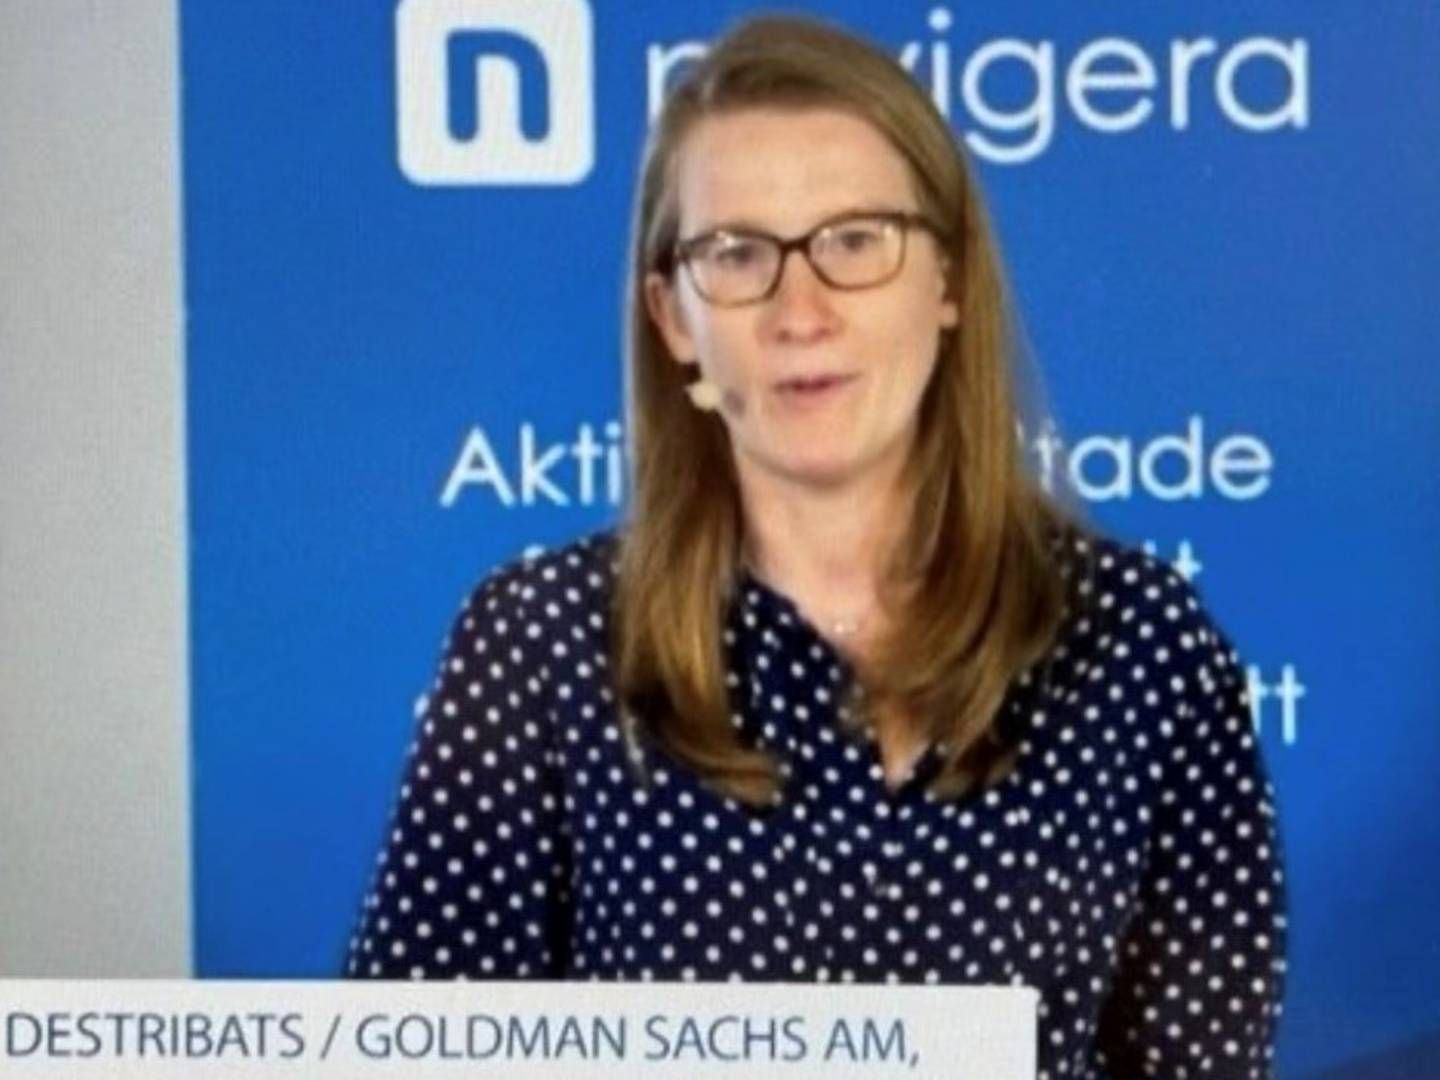 Laura Destribats, portfolio manager, Goldman Sachs Asset Management | Photo: PR / Max Matthiessen & Goldman Sachs